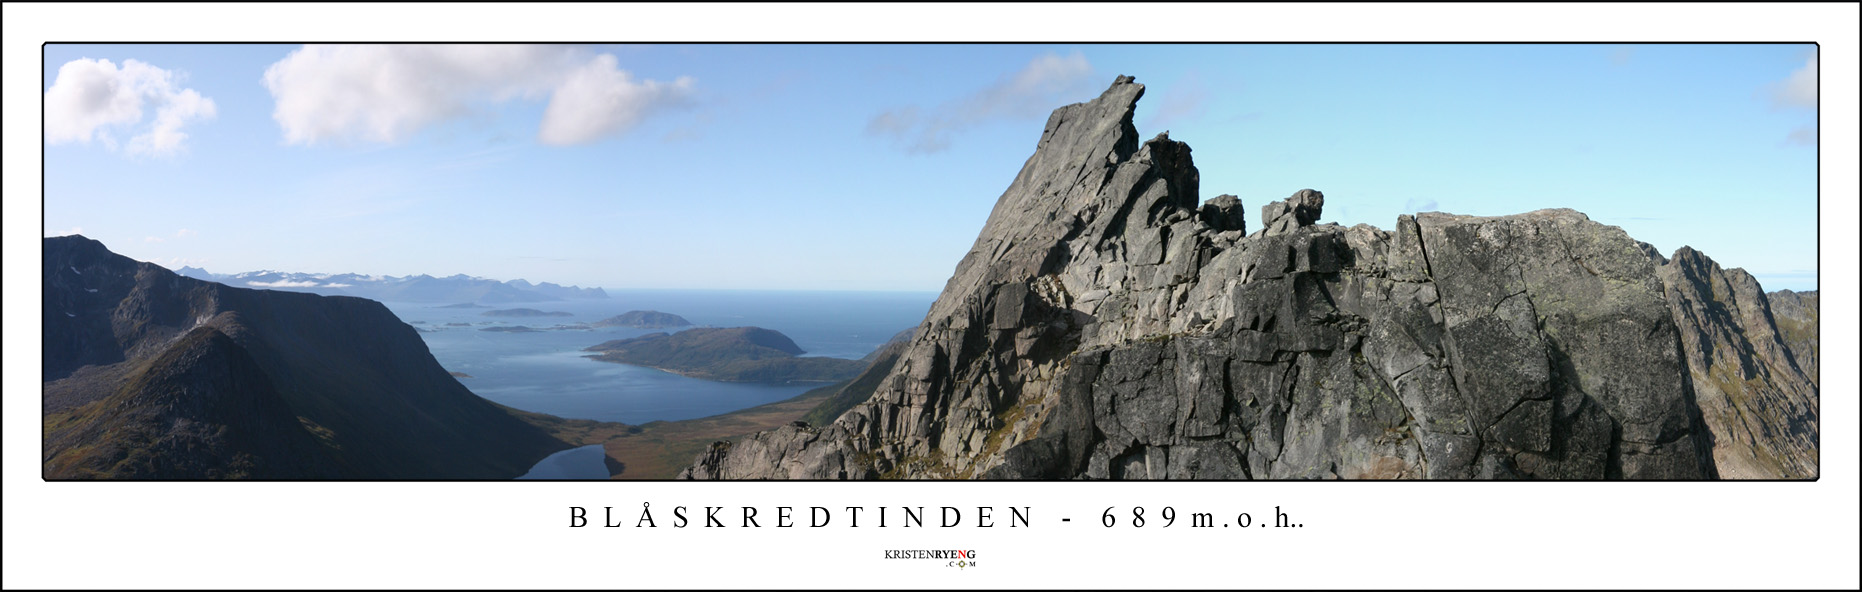 Panorama-Blaskredtinden4.jpg - Blåskredtinden - 689 moh (Kvaløya)